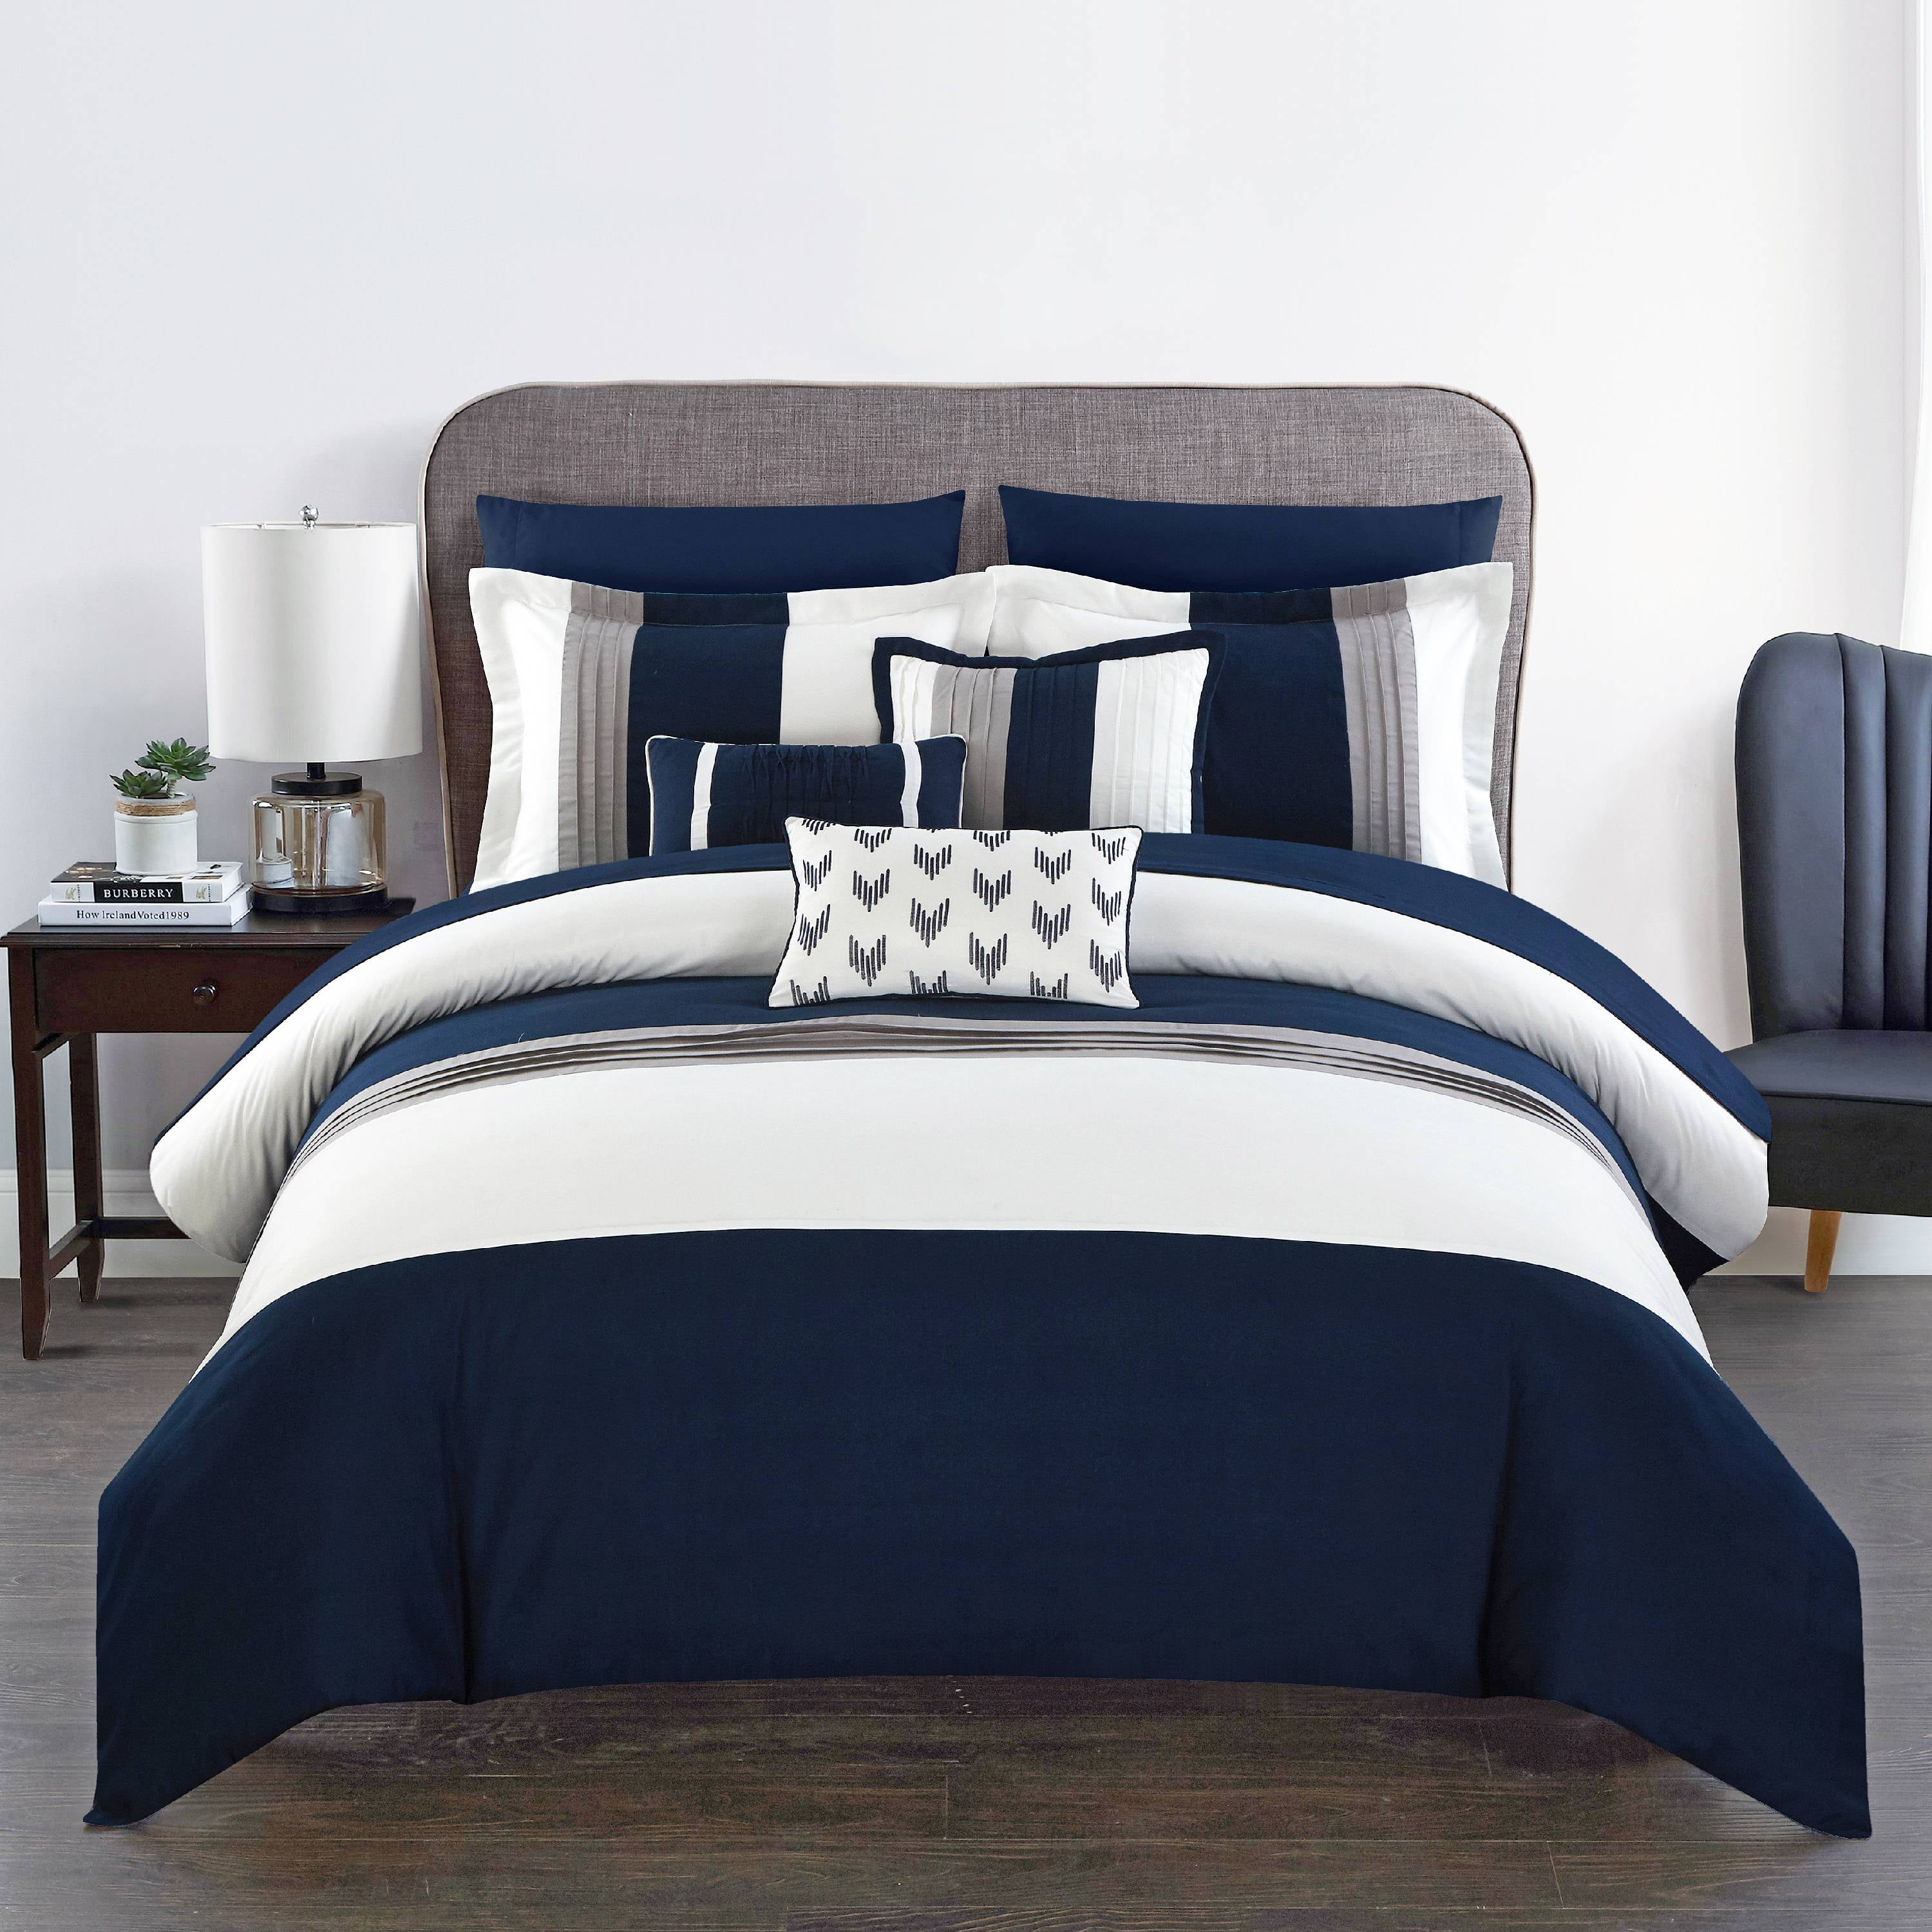 Karras 10 Piece Comforter Bed in a Bag Sheets Decorative Pillows Shams Plum 